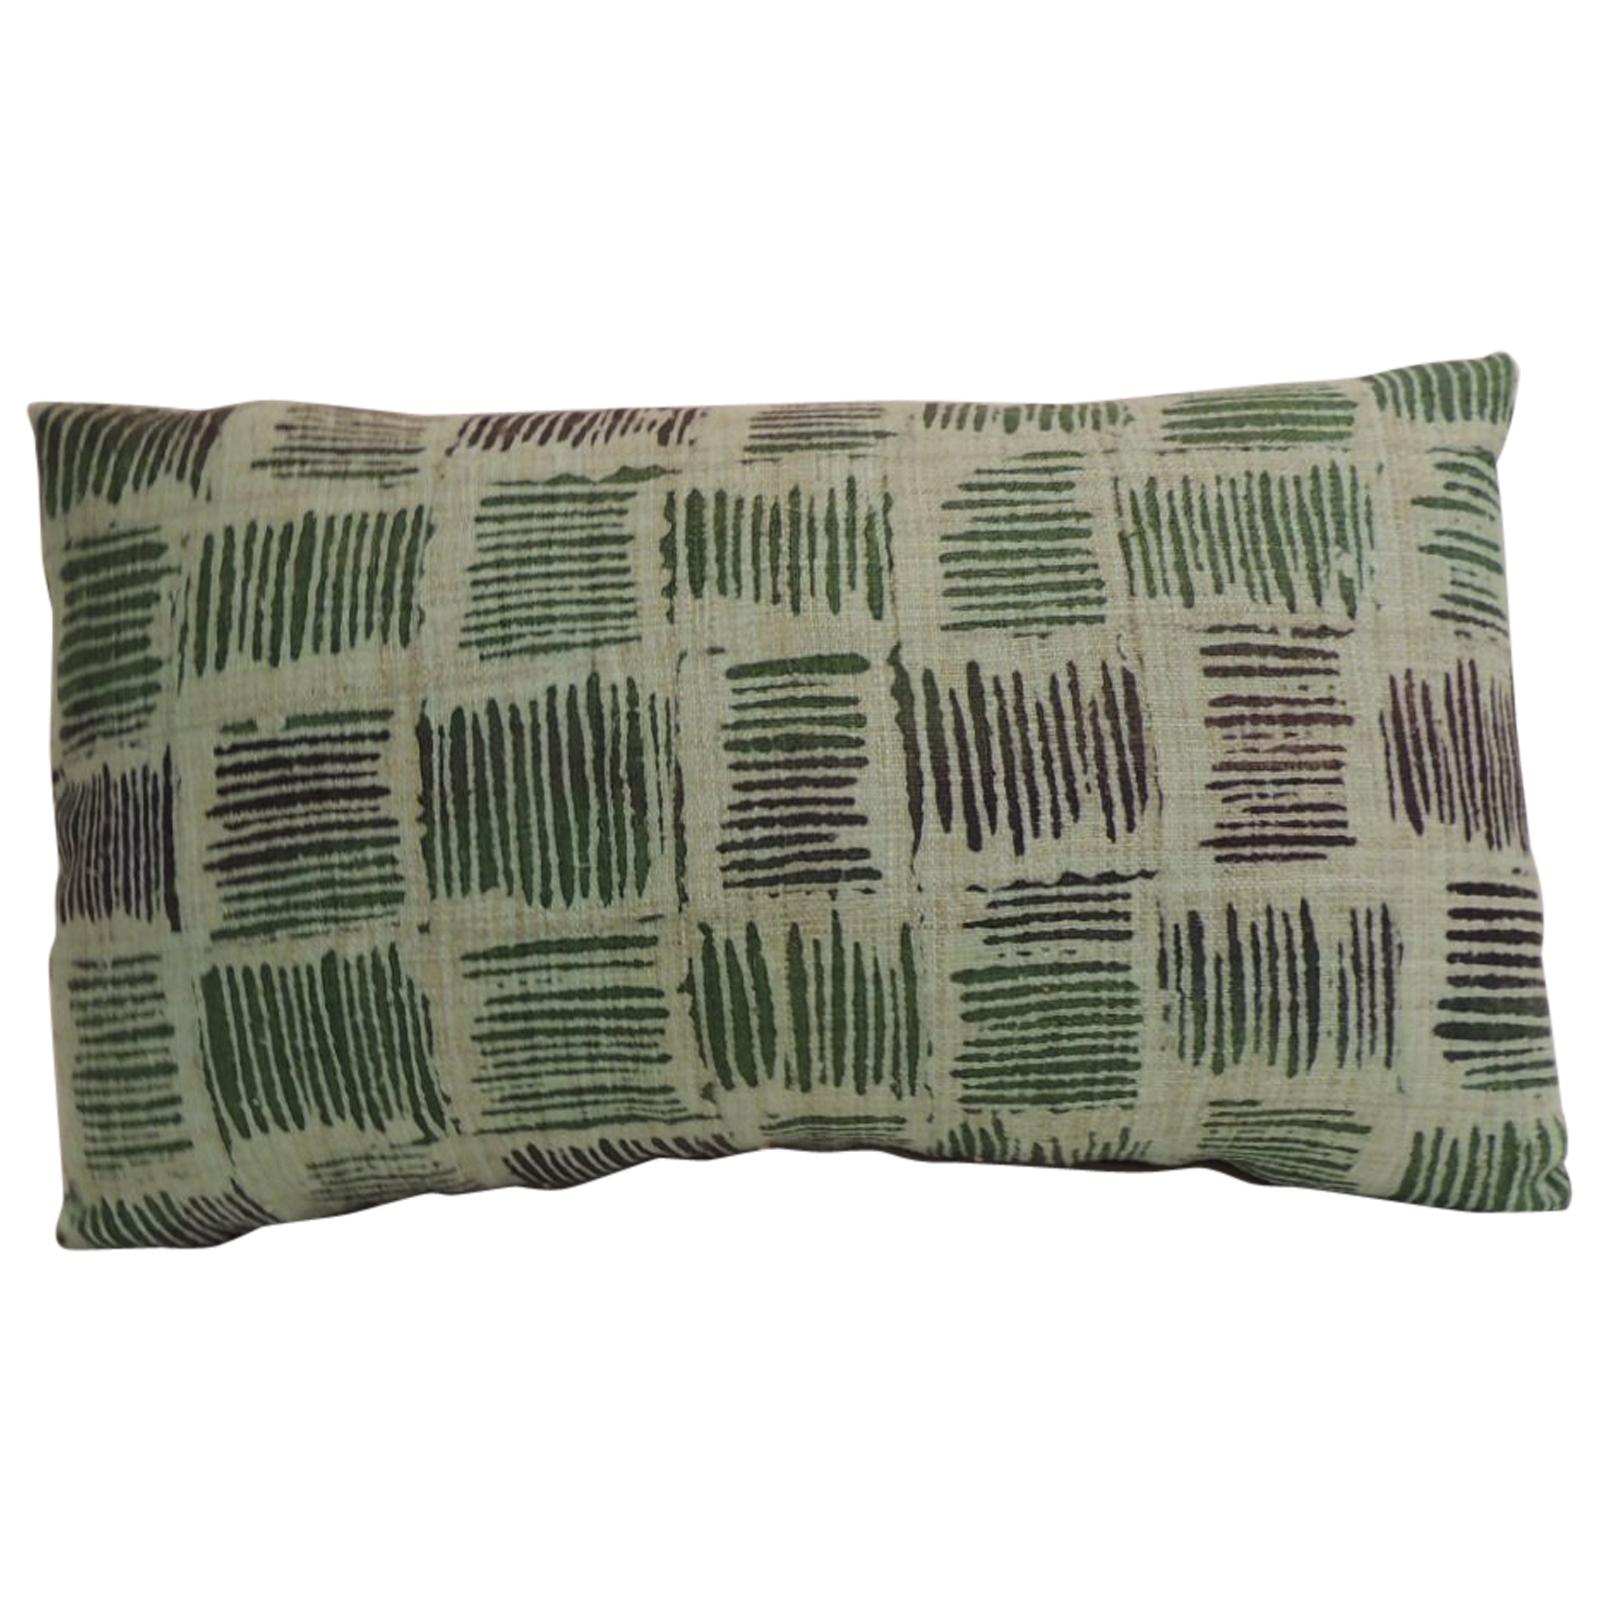 Vintage Hand Blocked Green and Brown Decorative Lumbar Pillow